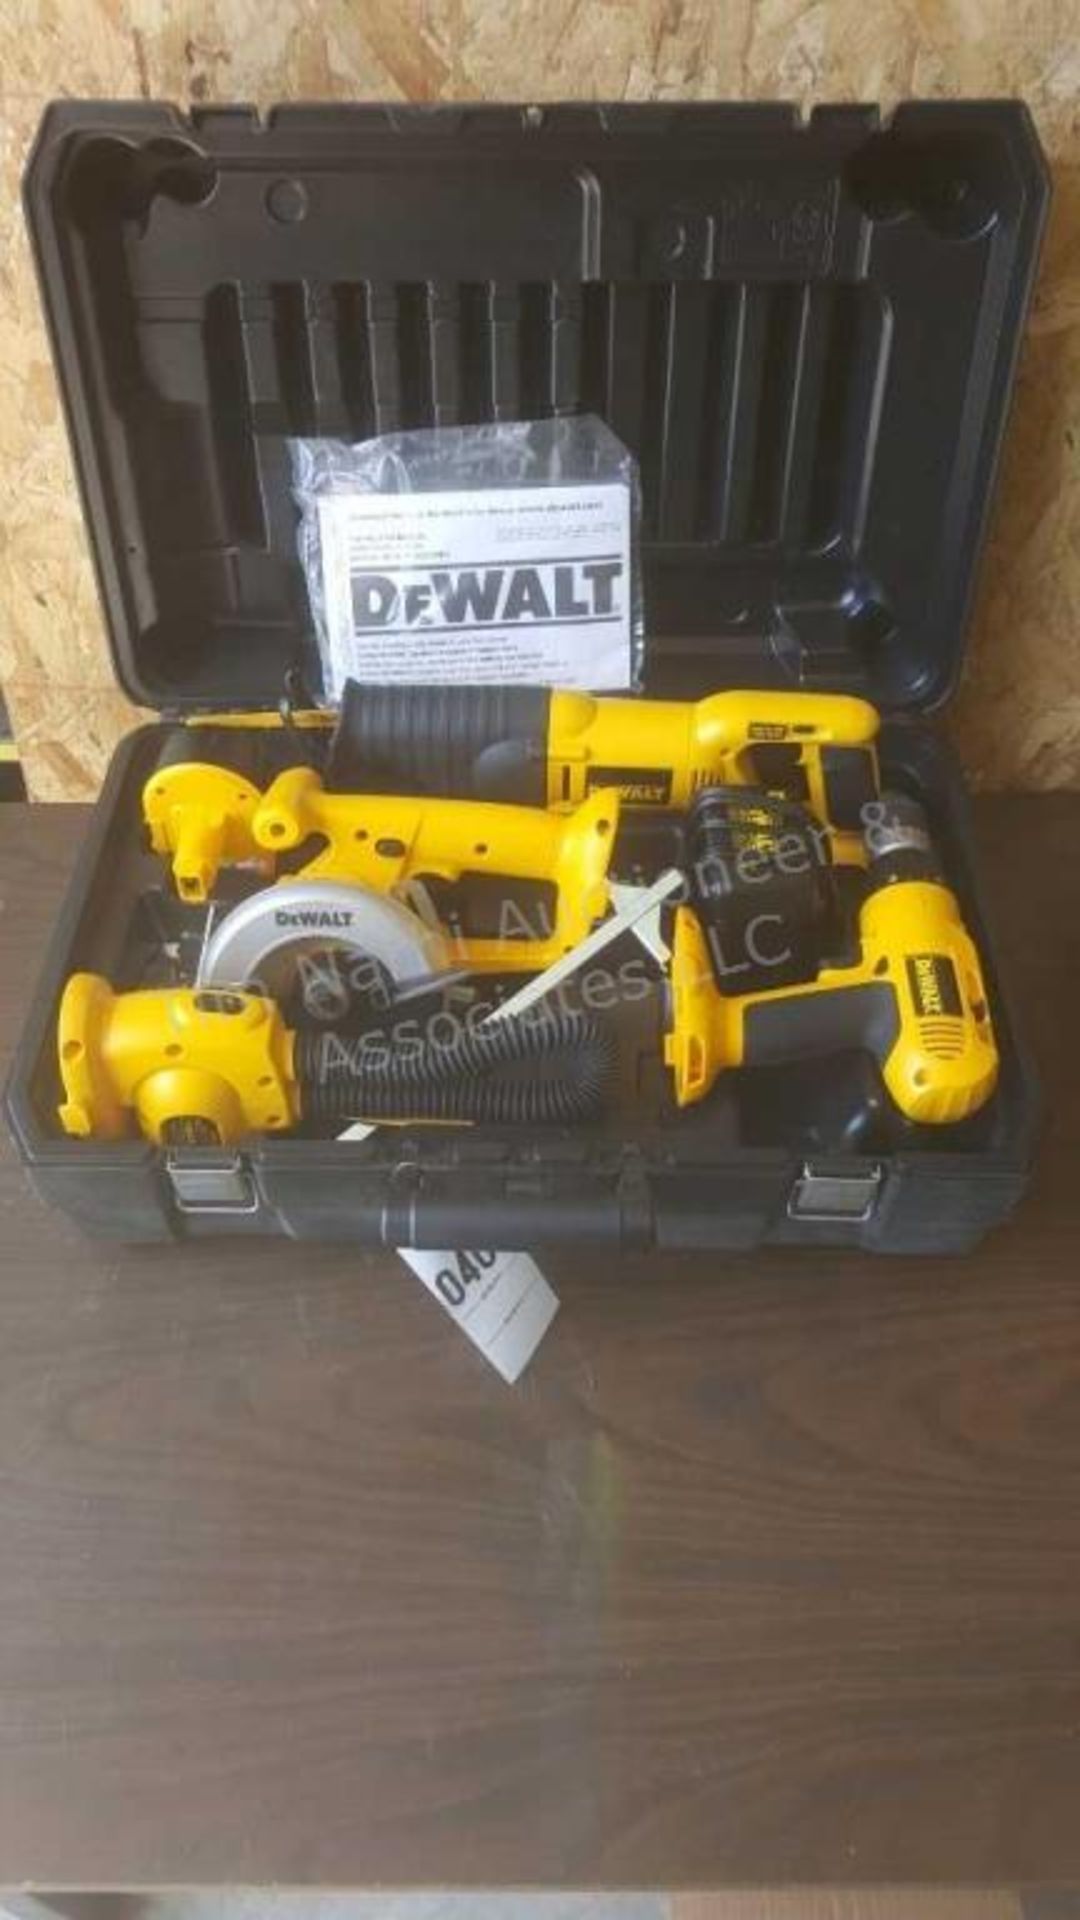 Dewalt 18v cordless tool set